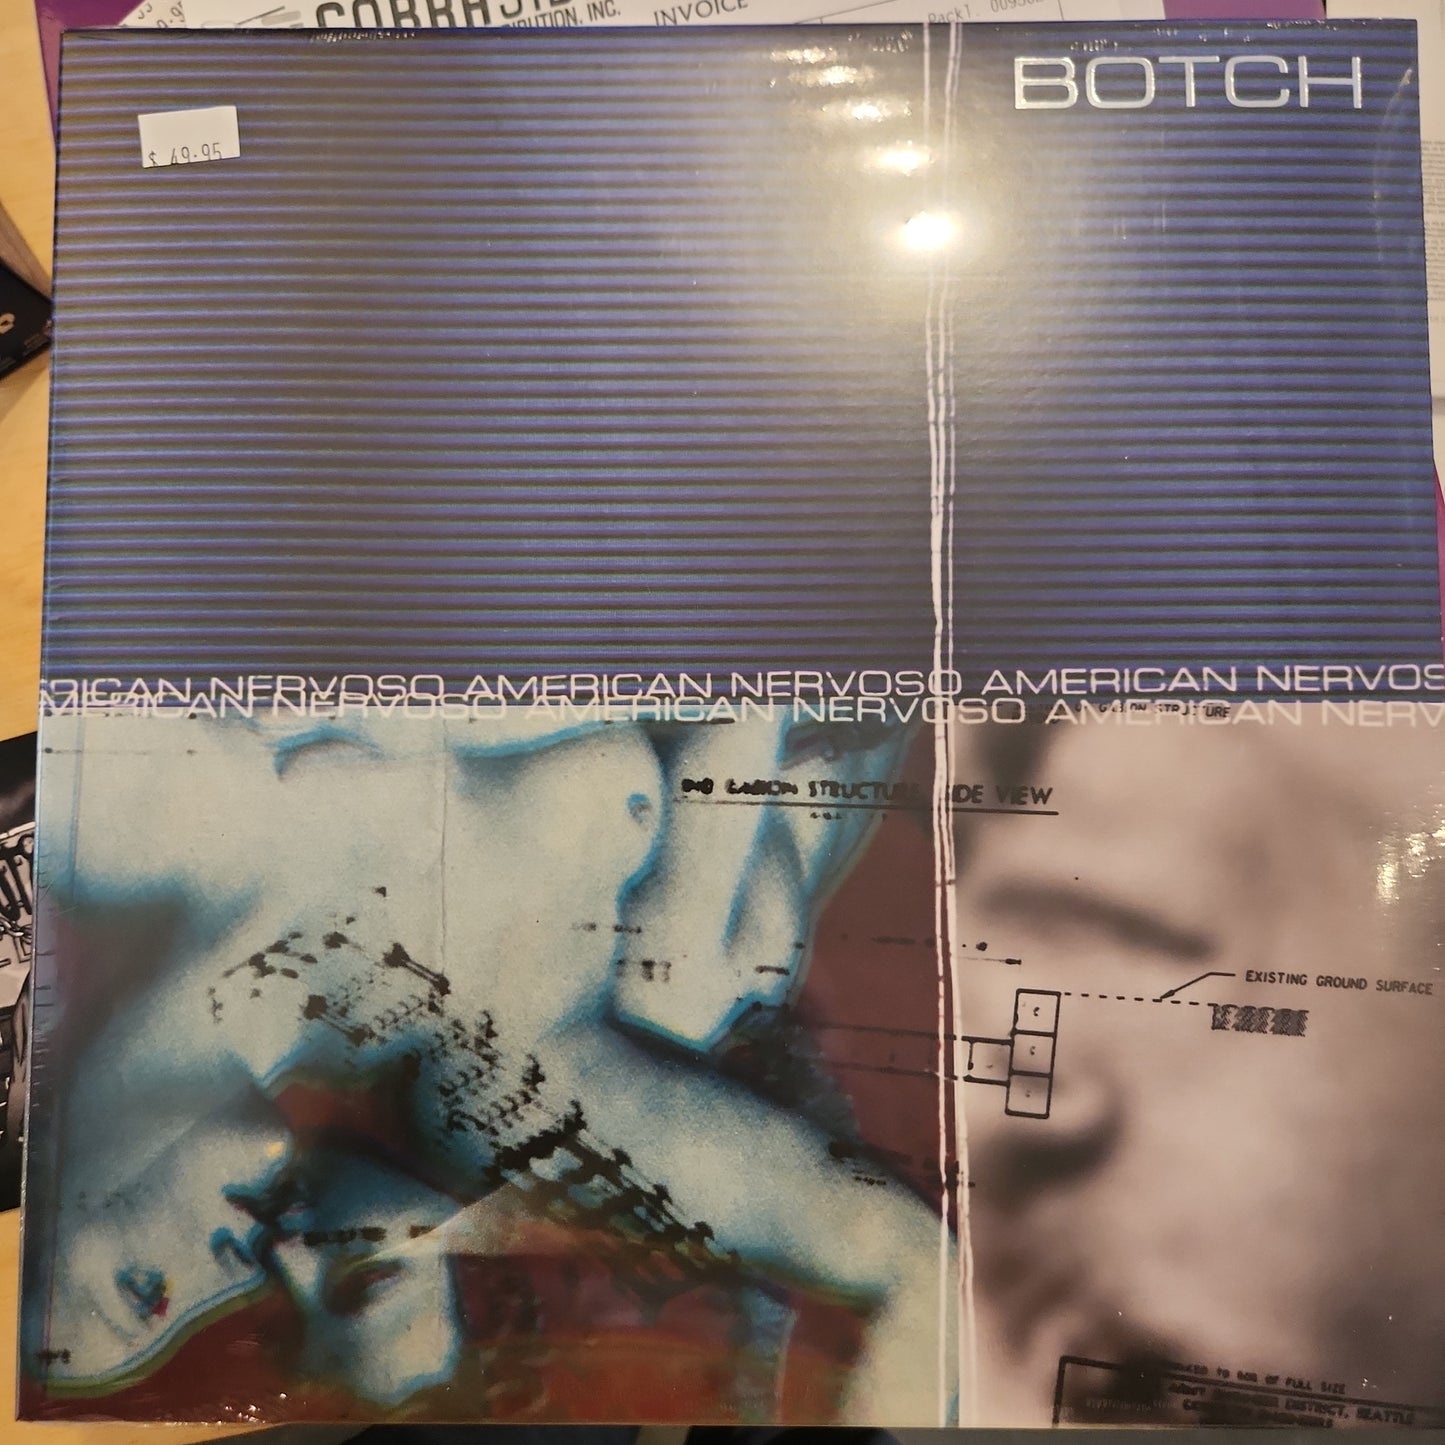 Botch - American Nervoso - 25th Anniversary Edition Vinyl LP